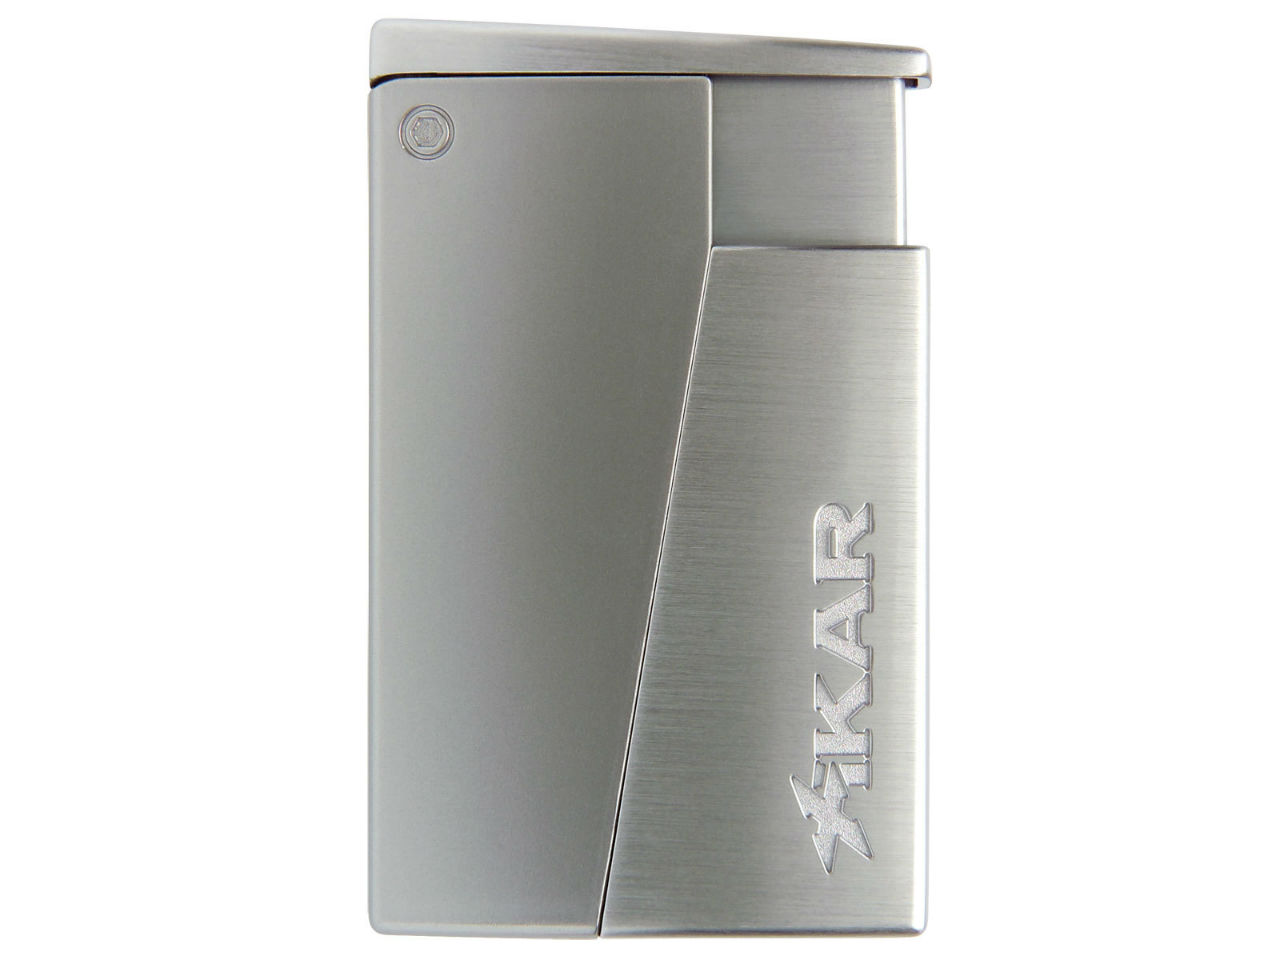  Xikar 546SL Incline Silver